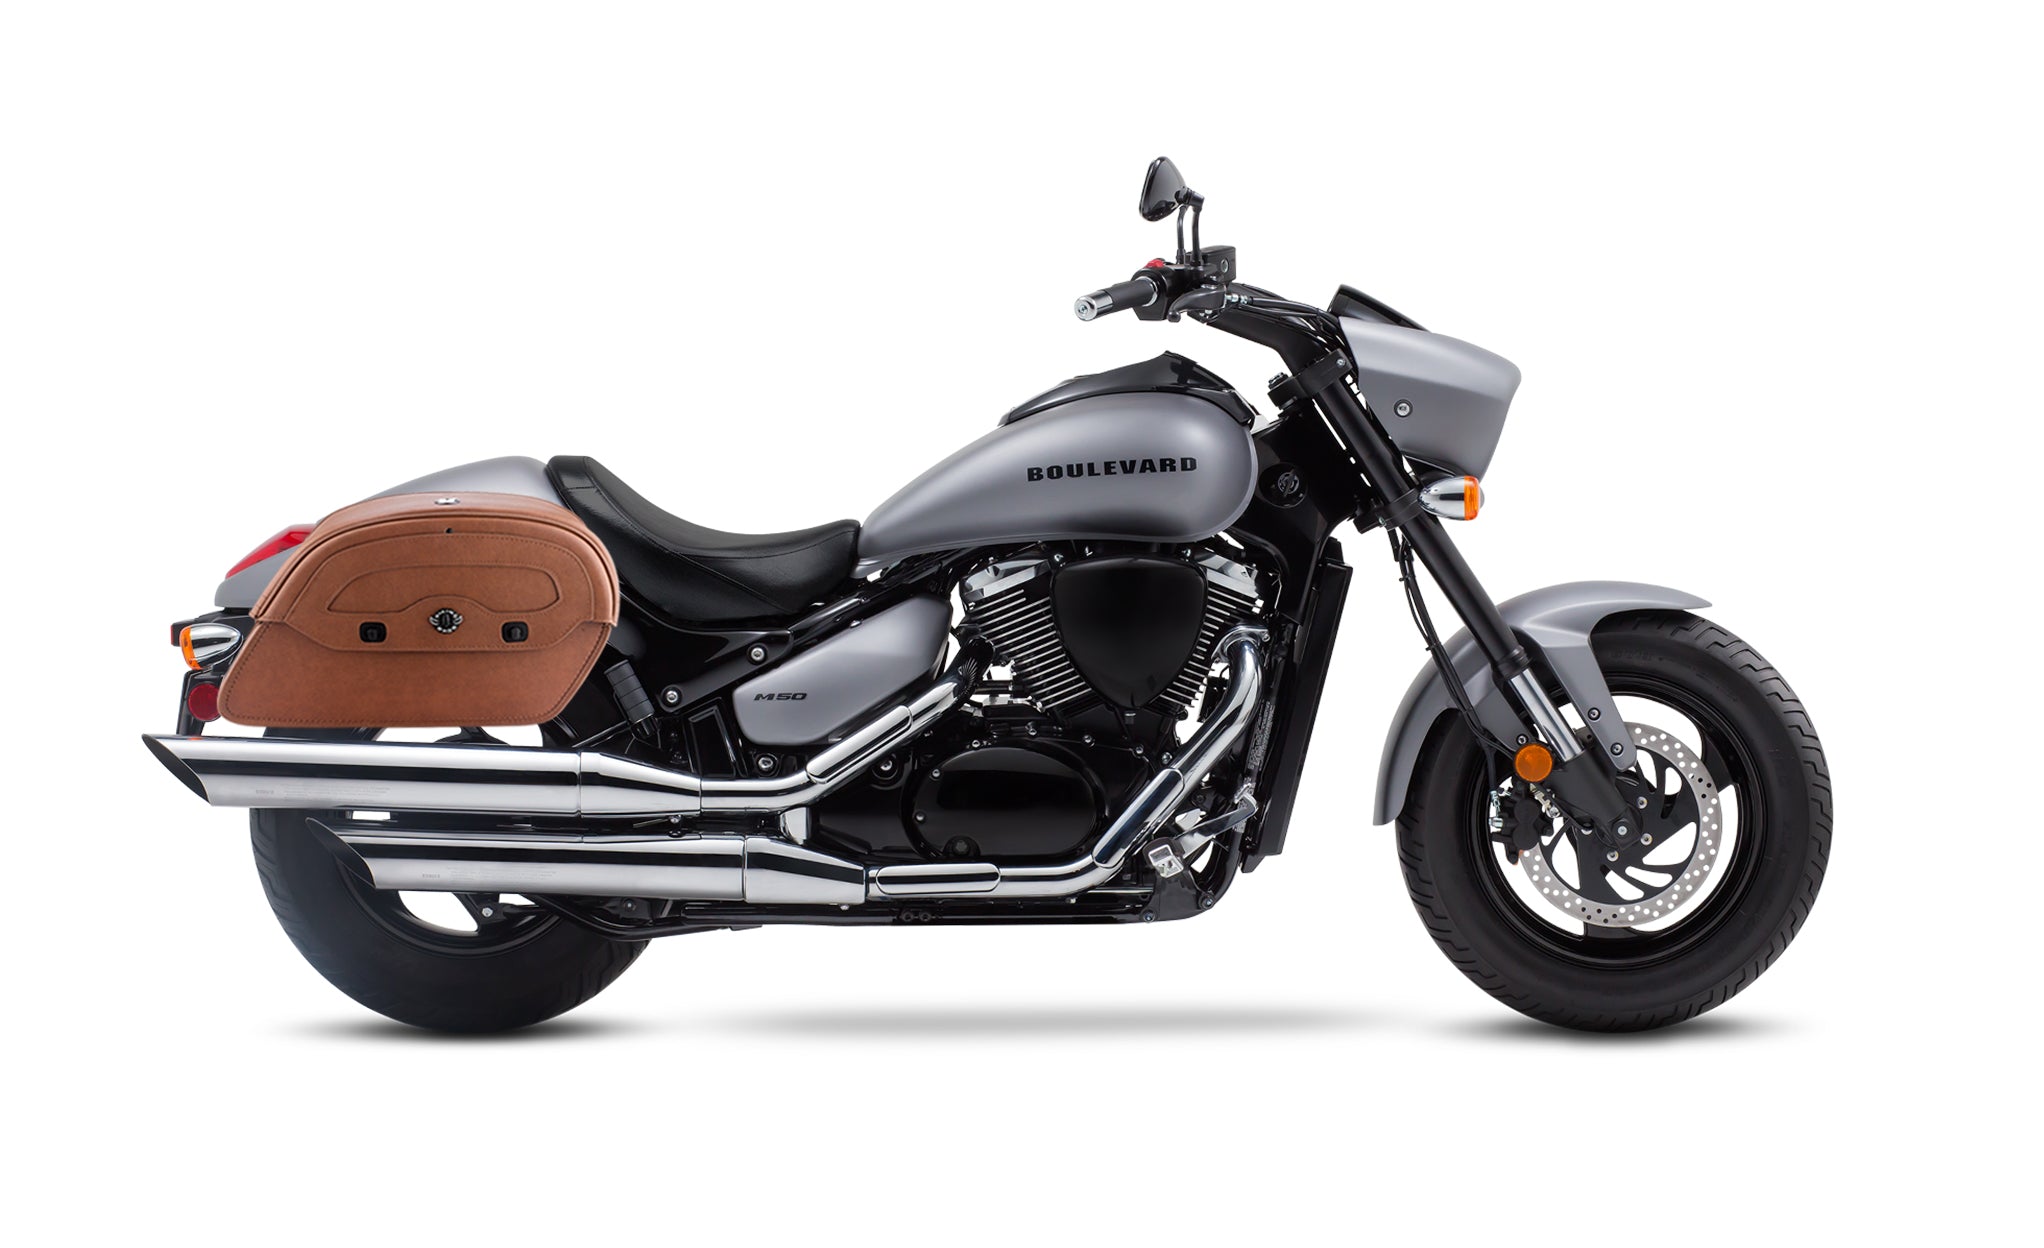 Viking Warrior Brown Large Suzuki Boulevard M50 Vz800 Leather Motorcycle Saddlebags on Bike Photo @expand